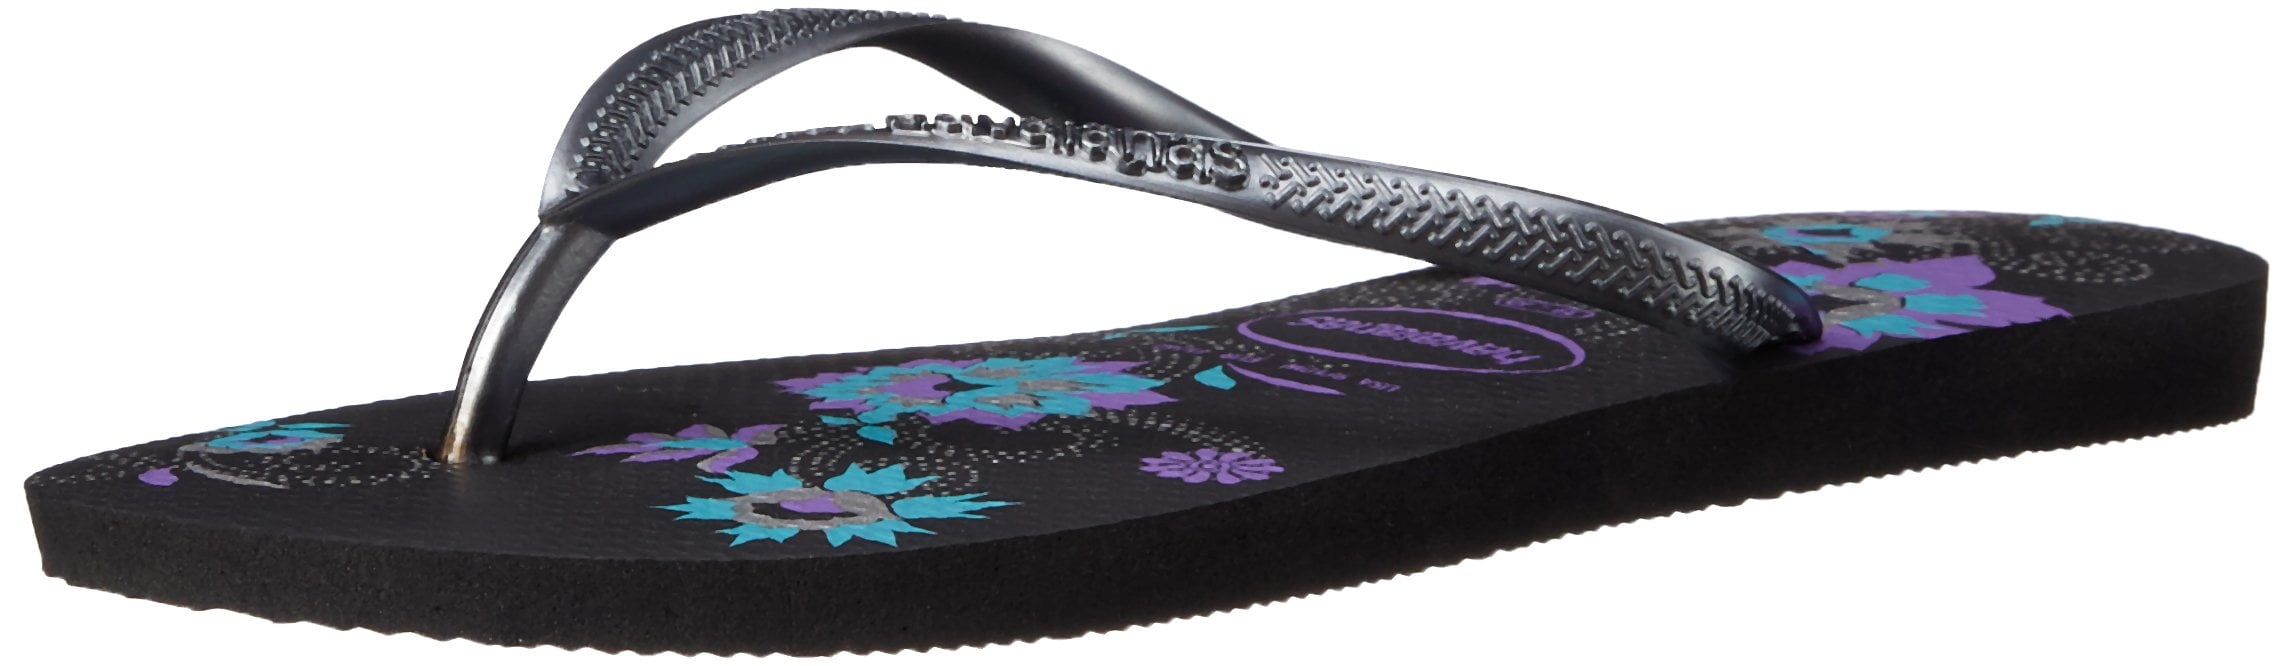 Havaianas - Havaianas Slim Organic Sandal Sandals Black - Walmart.com ...